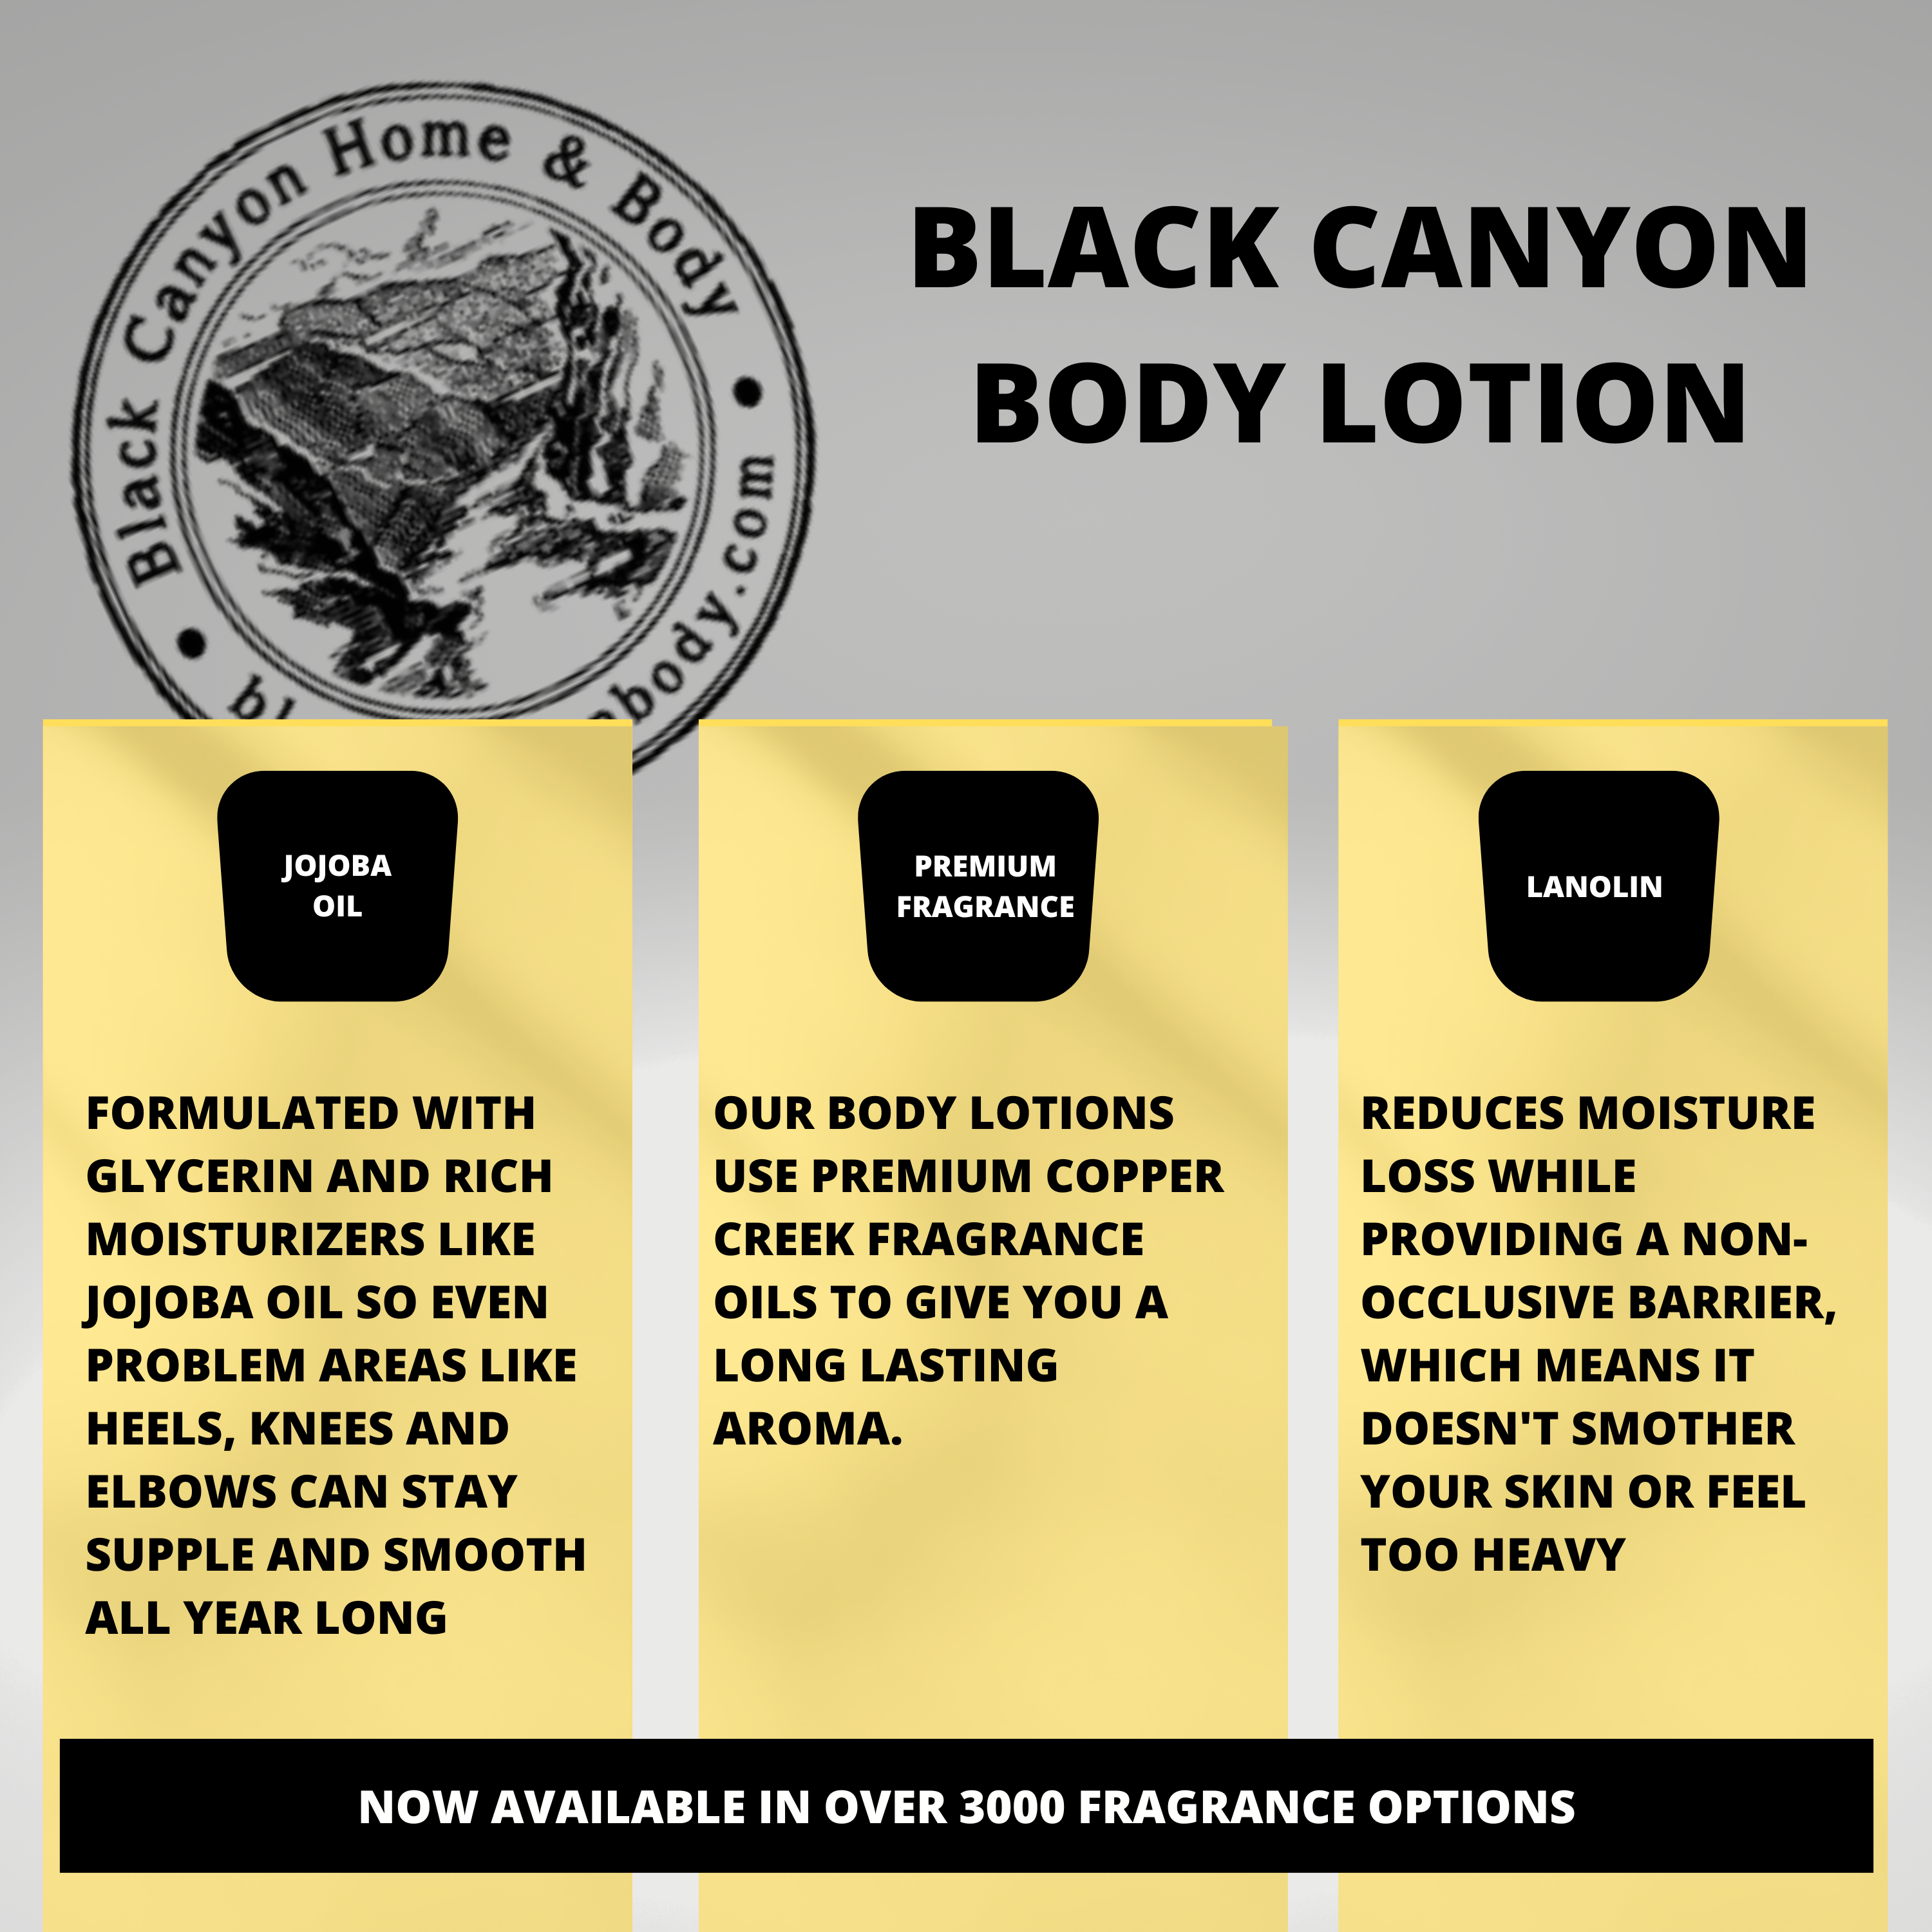 Black Canyon Caramel Popcorn Scented Luxury Body Lotion with Lanolin and Jojoba Oil